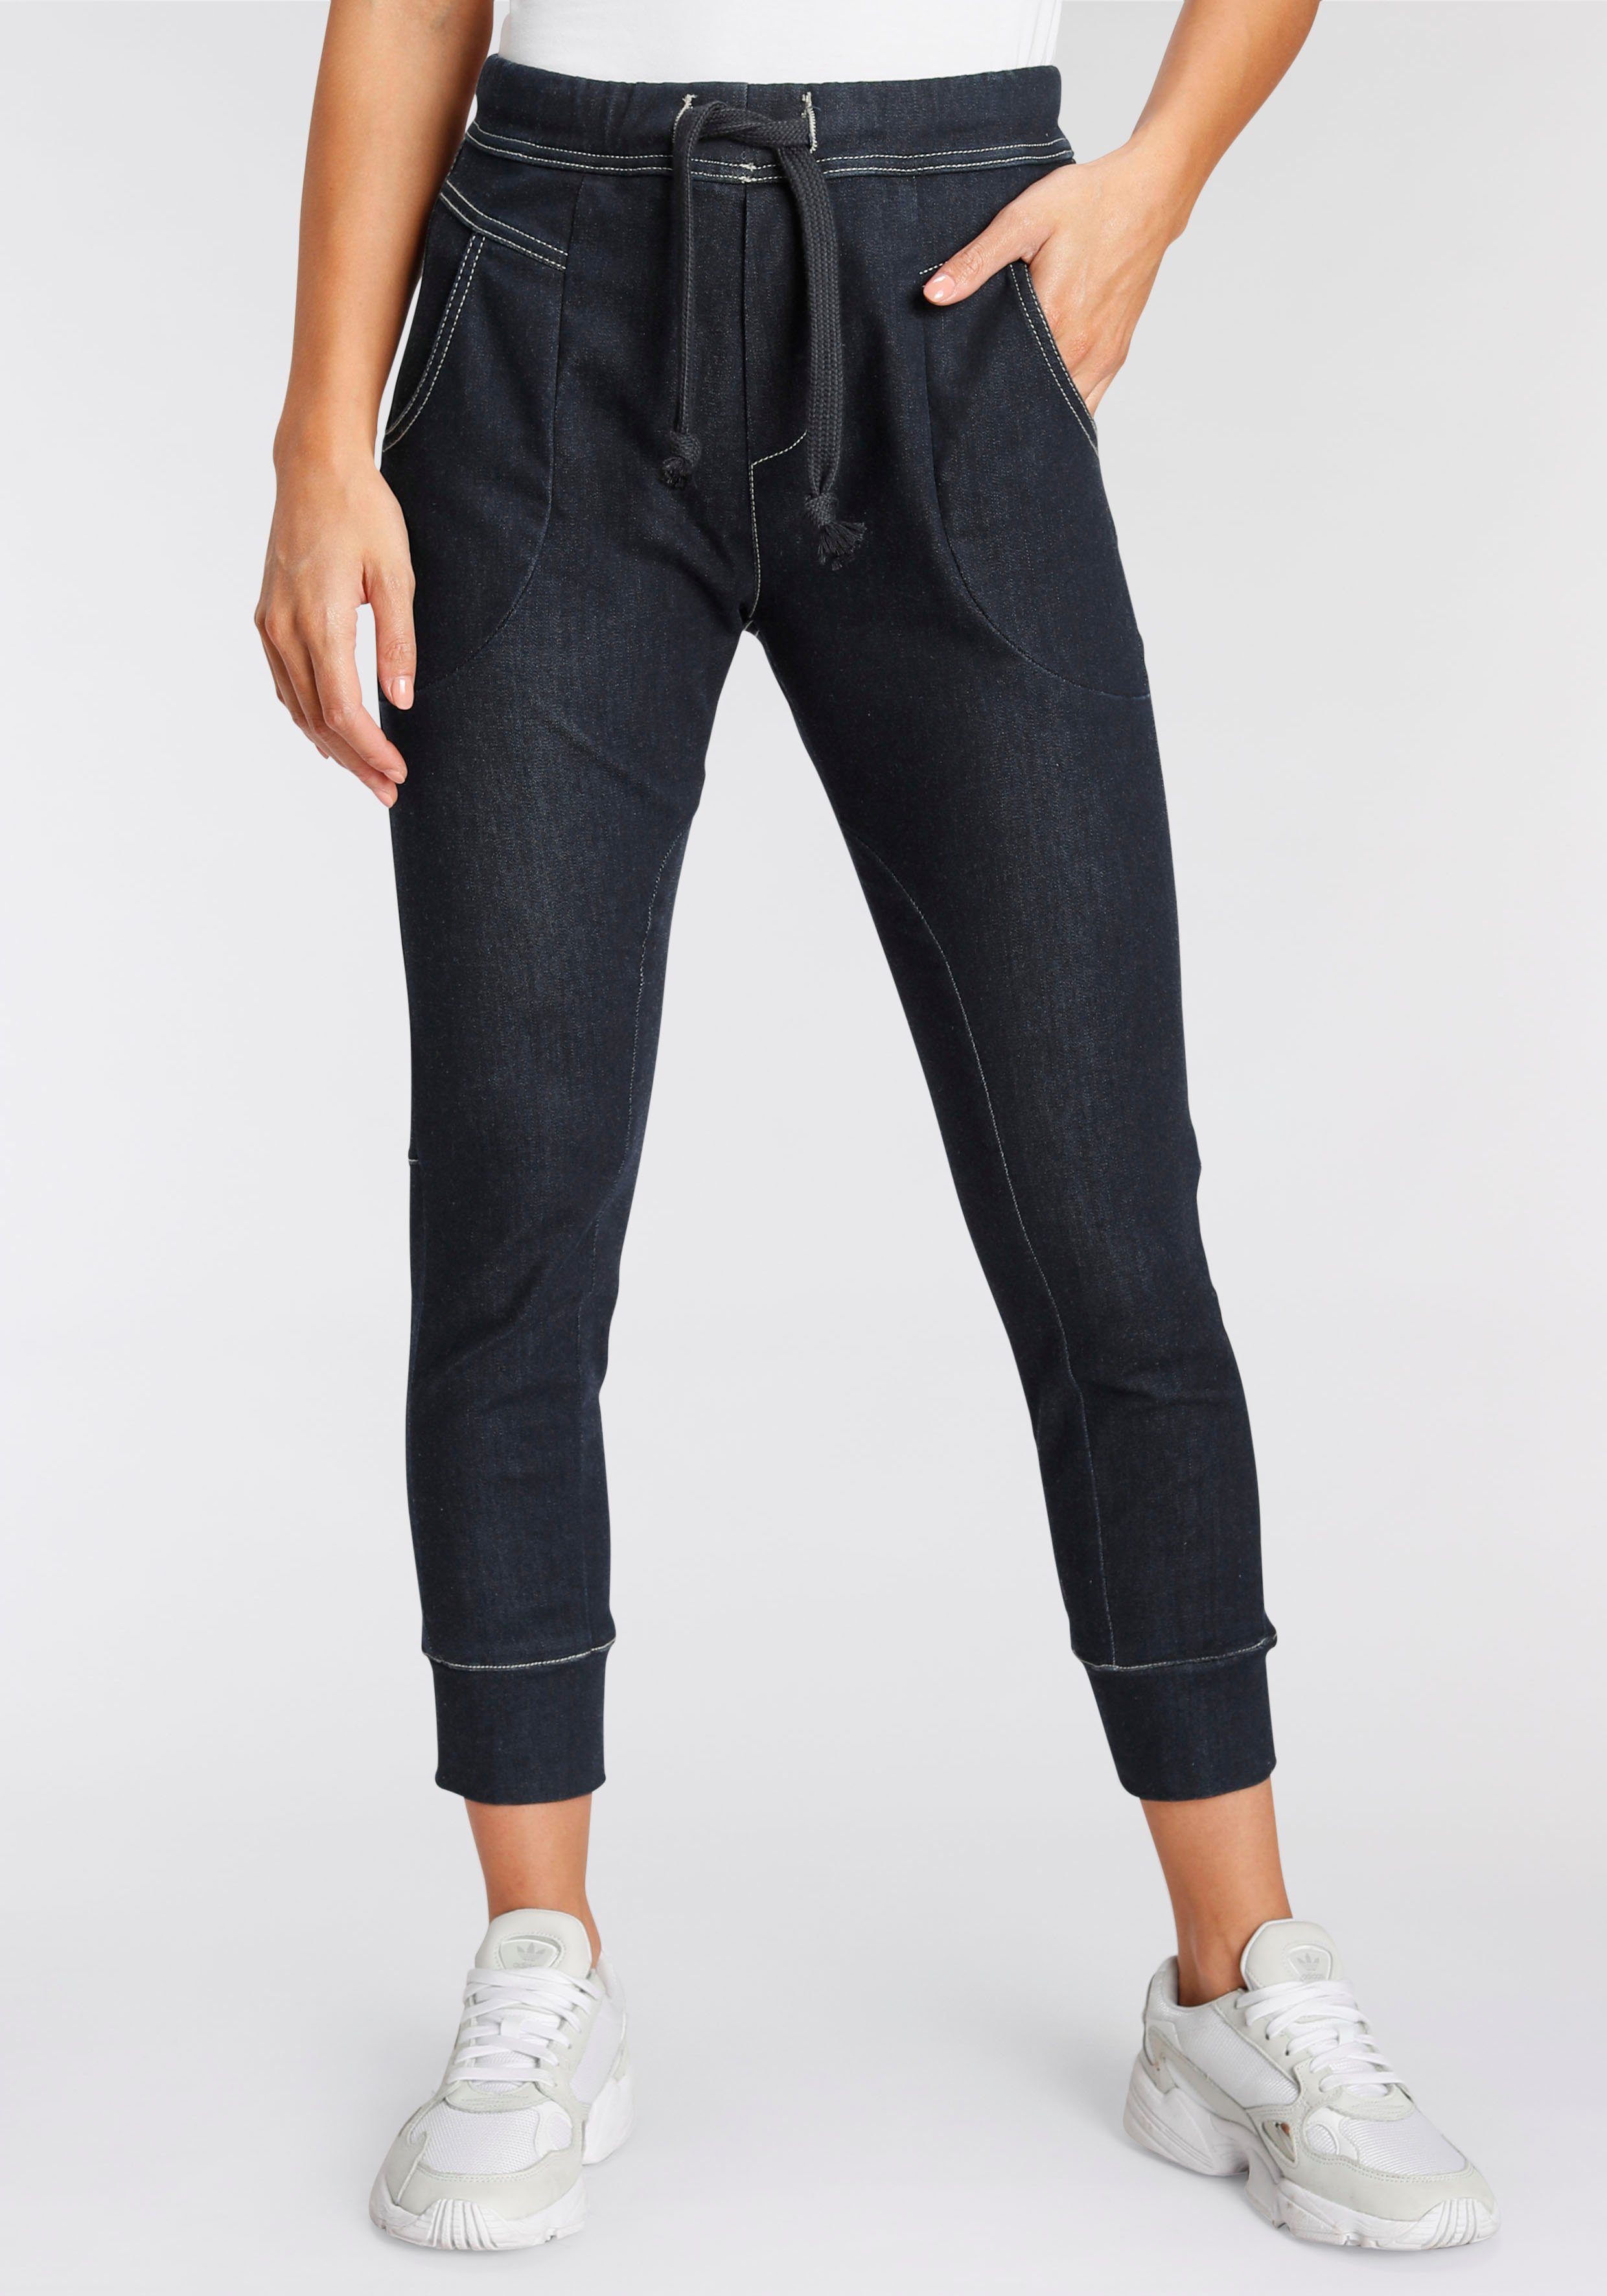 Damen Baumwolle Jogg Pants online kaufen » Jogg Jeans | OTTO